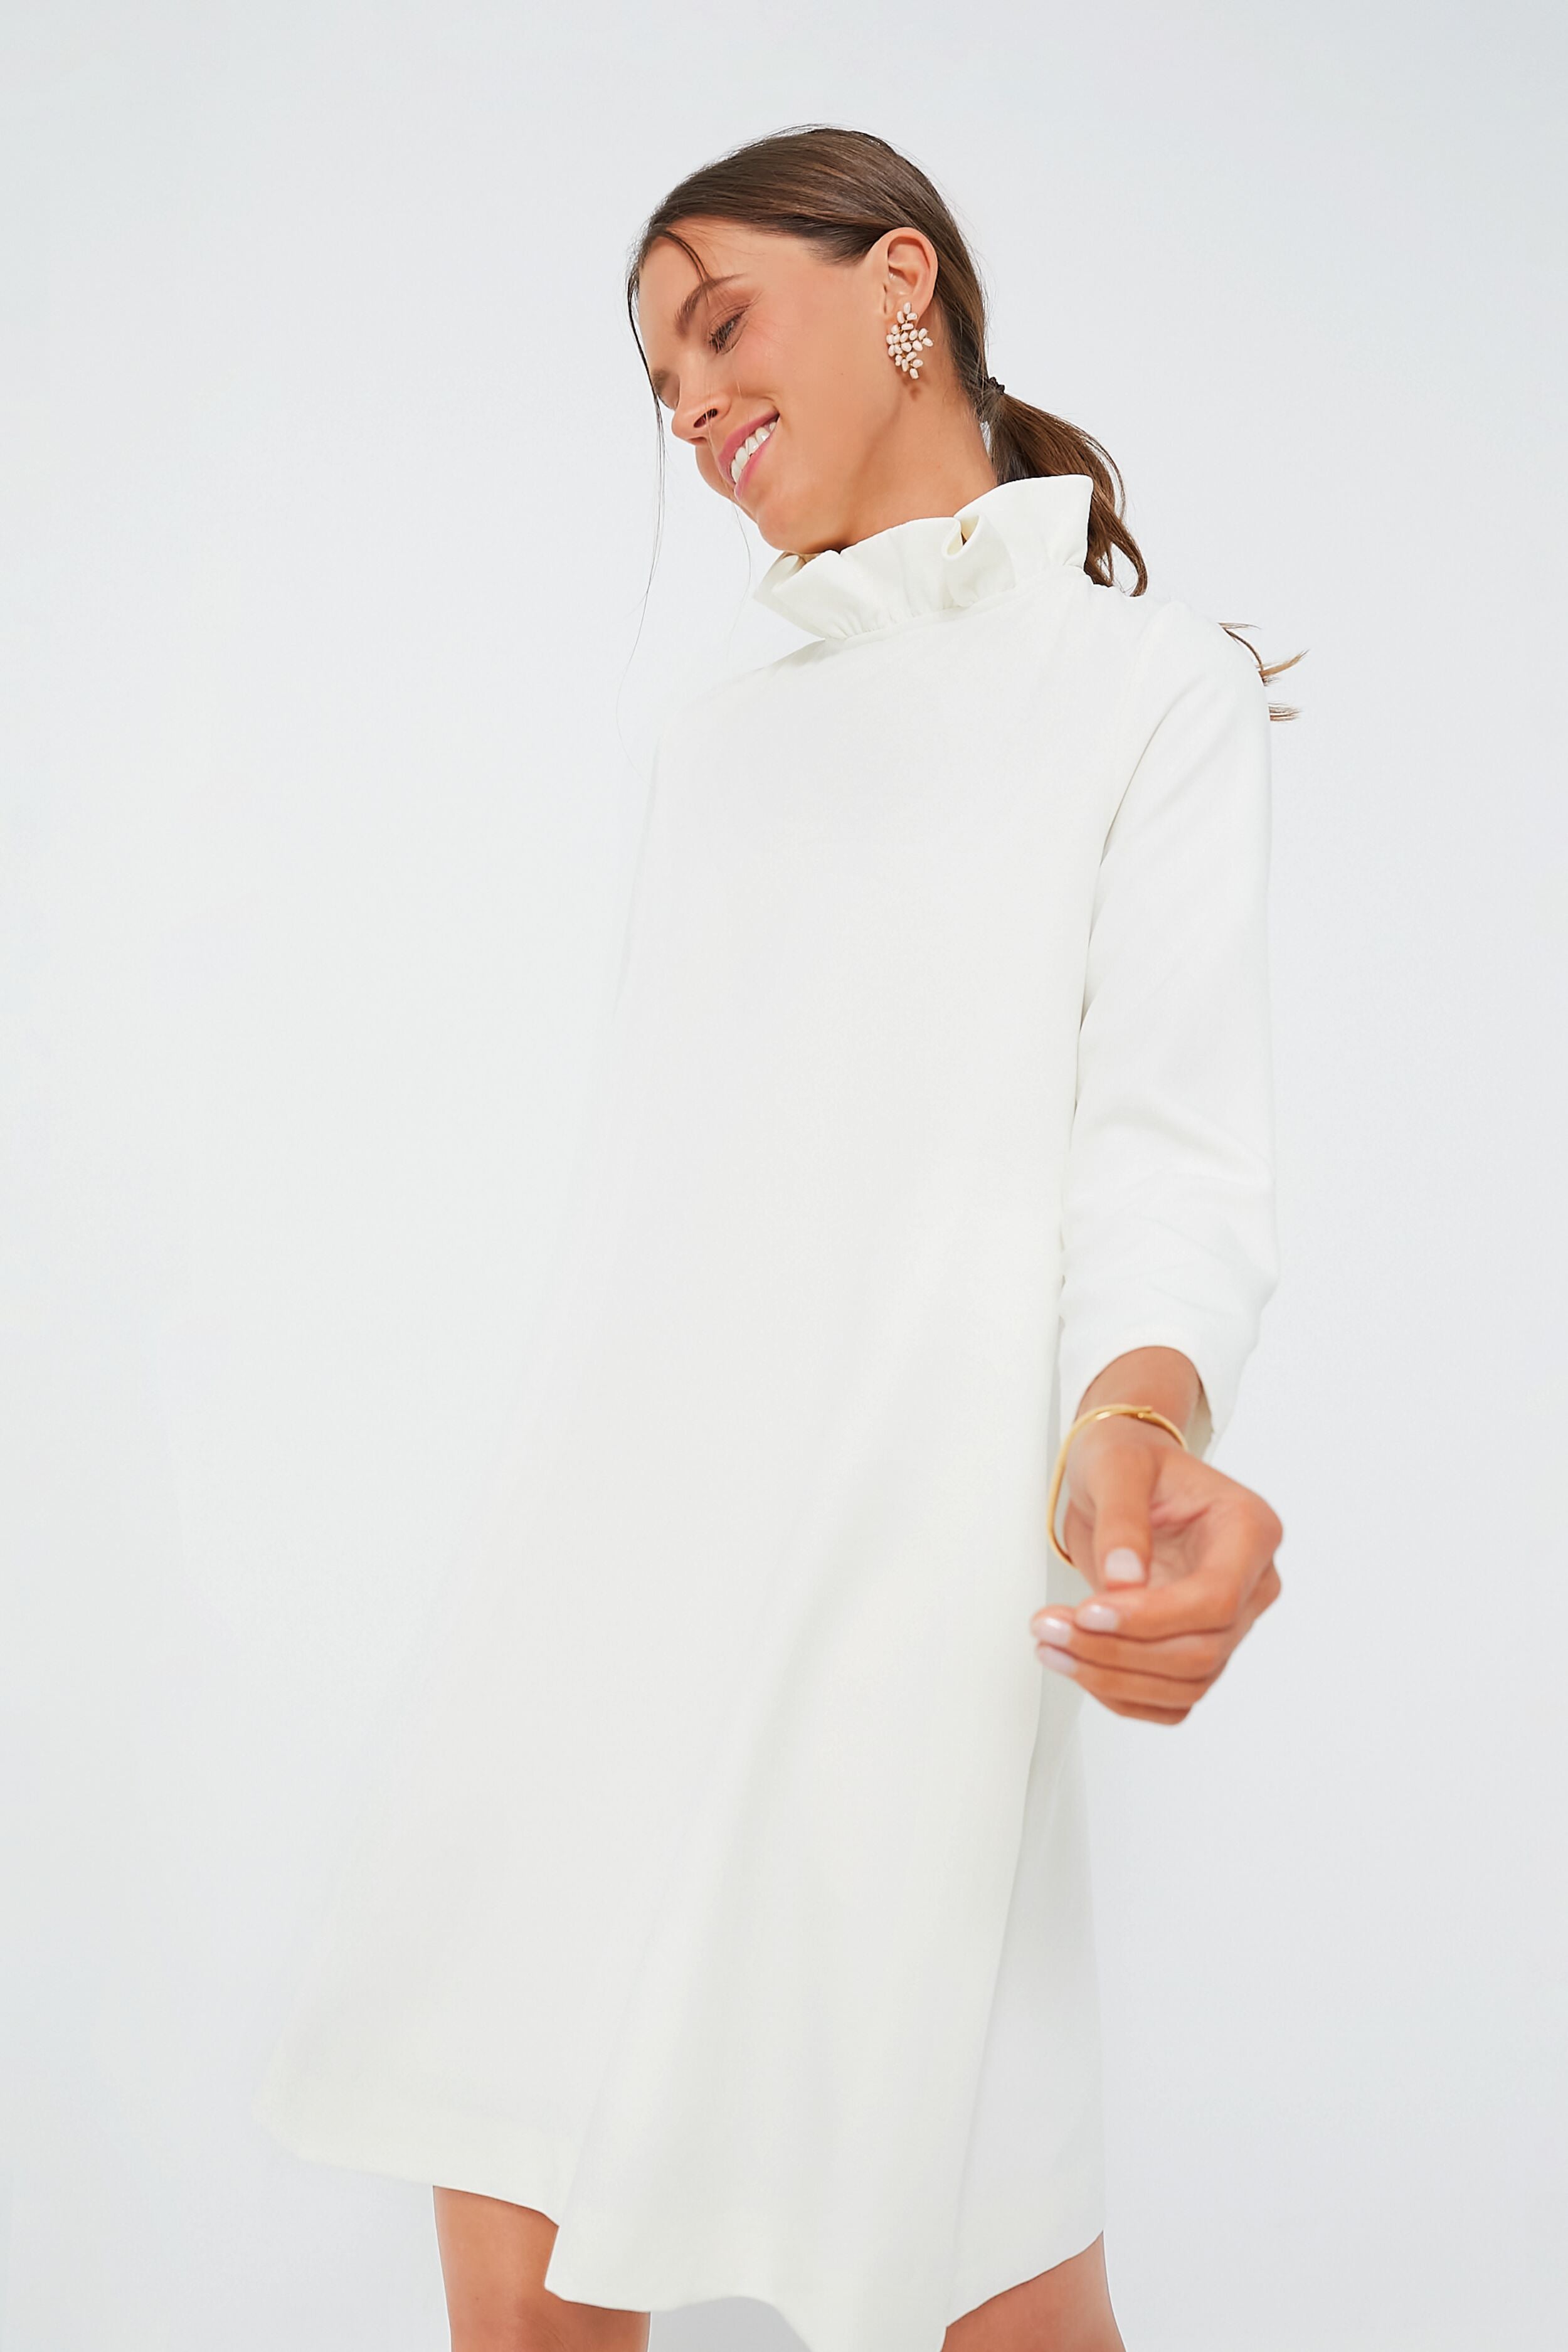 NEW Tuckernuck Dress Pierce Long Sleeve White Mini Dress Size S - Dresses